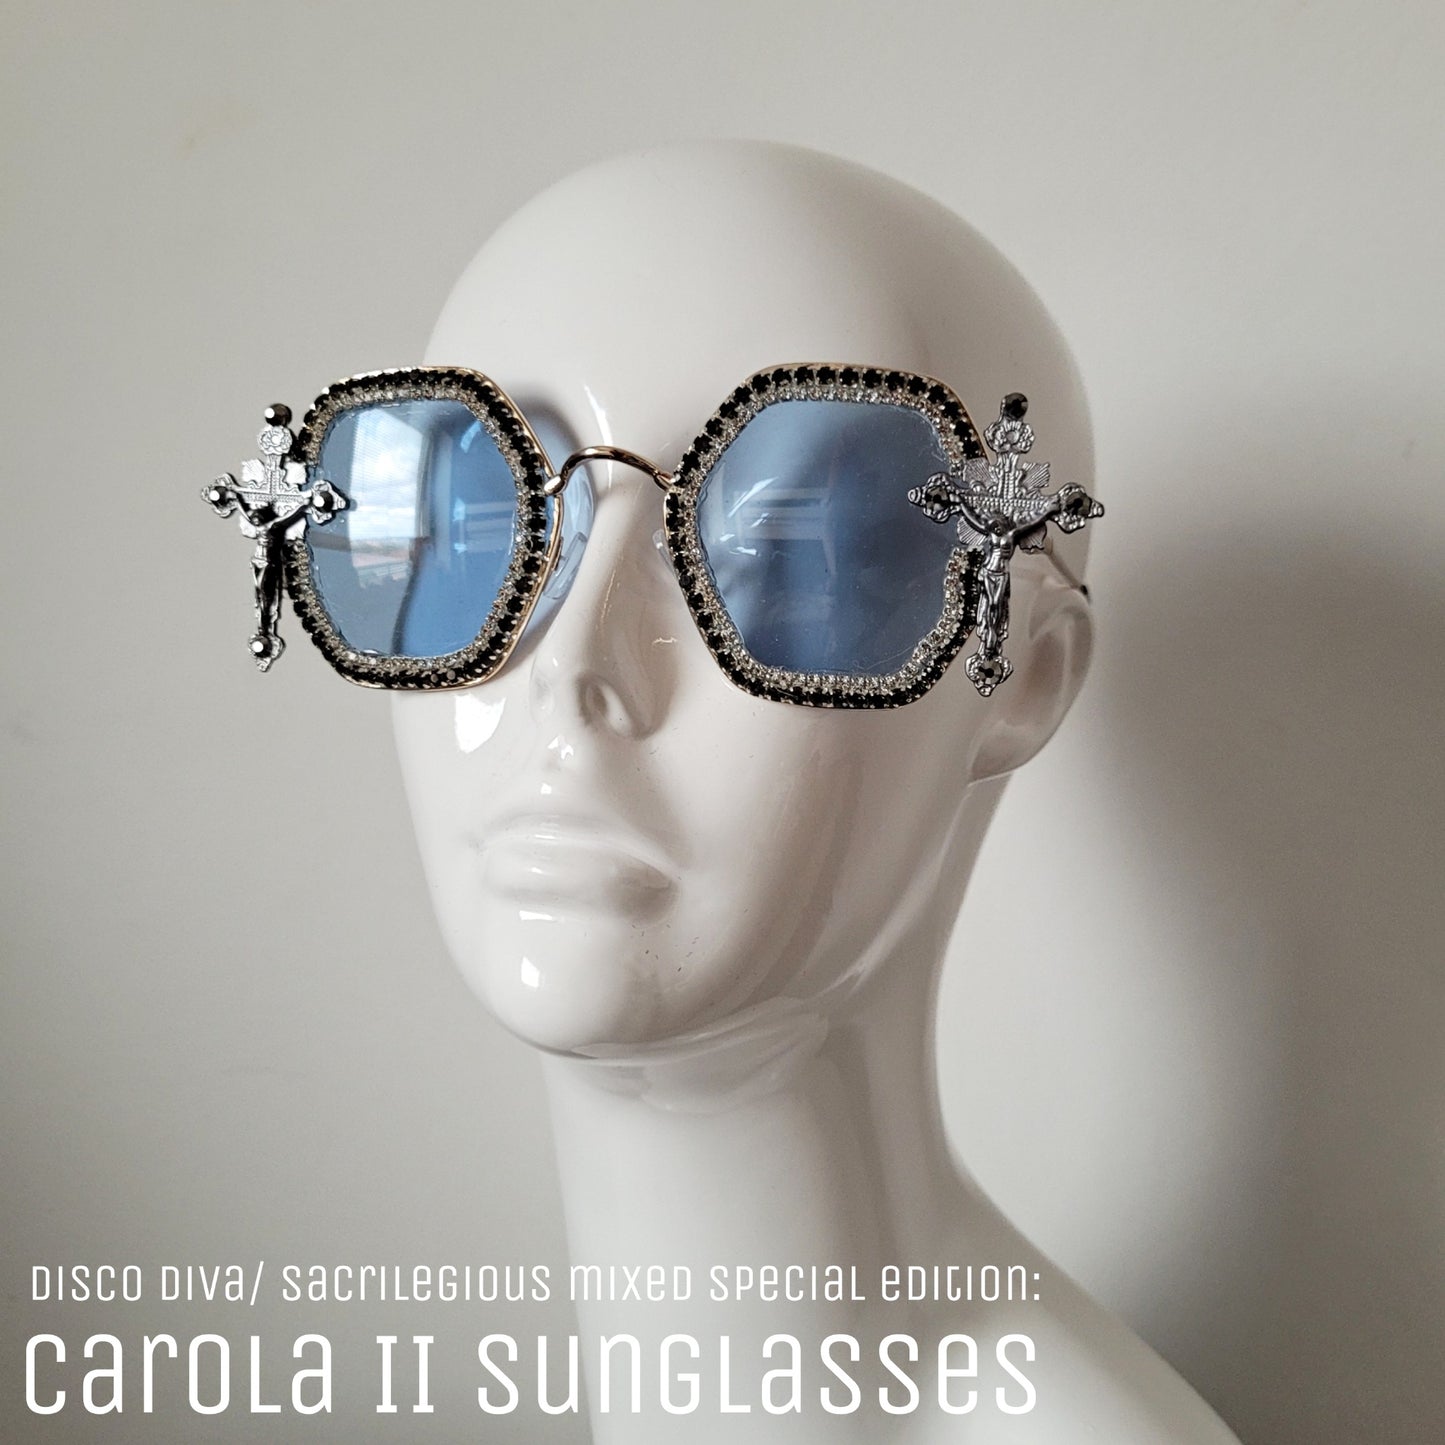 Disco Divas | Sacrilegious mixed special edition: Carola II Sunglasses